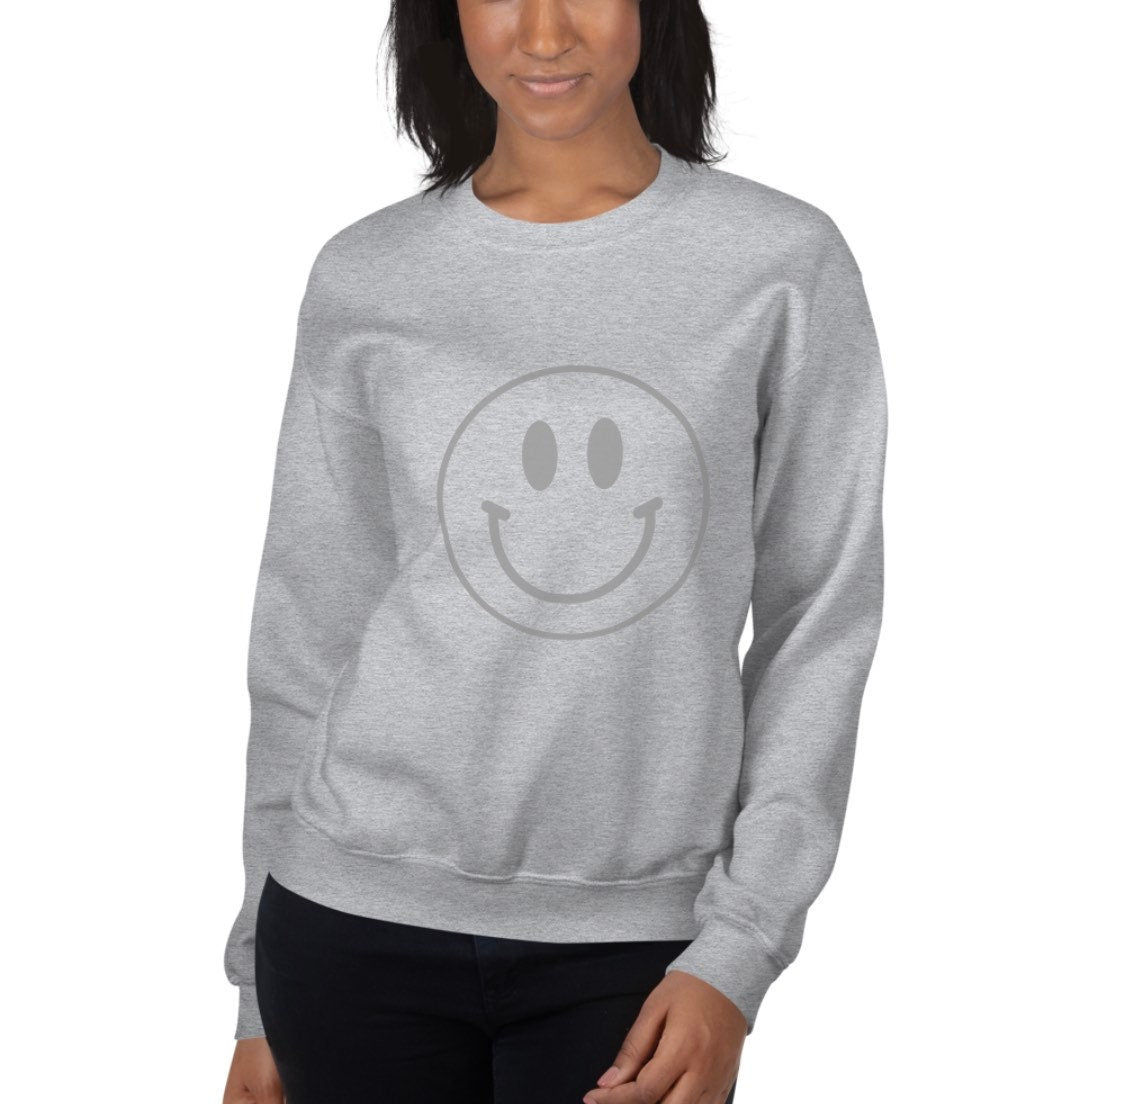 Ladies Smiley Face Sweatshirt